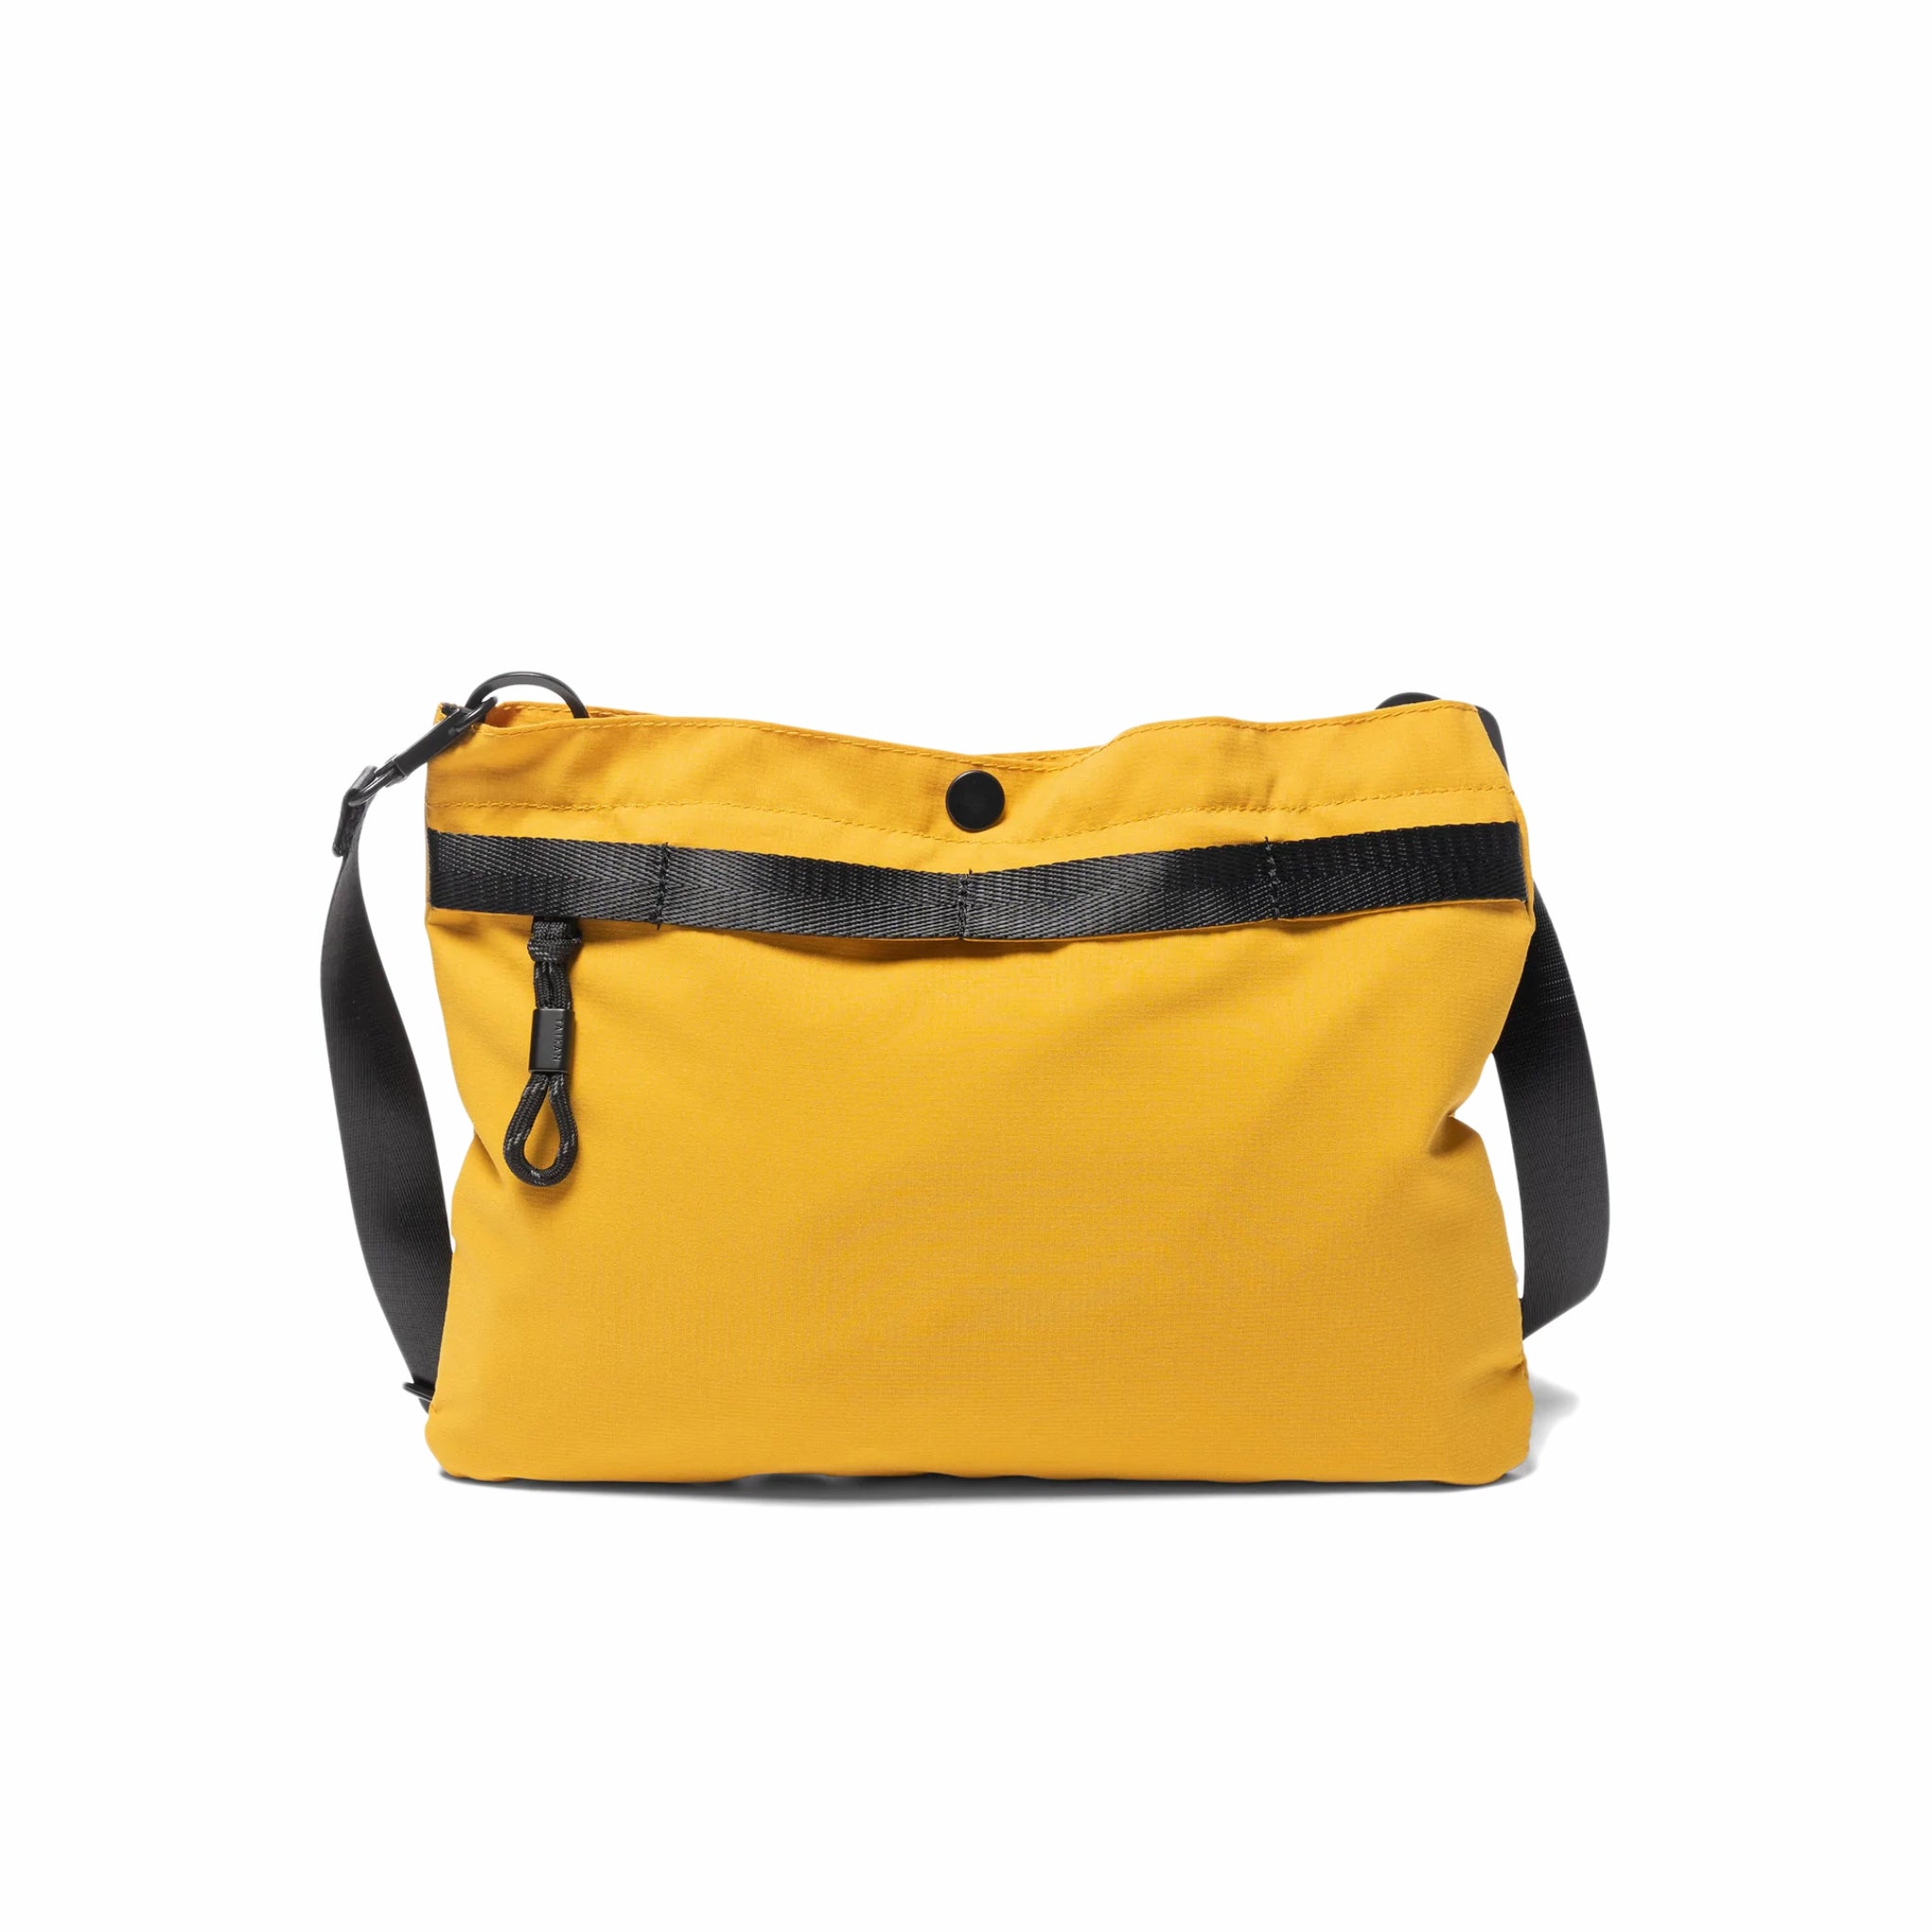 Taikan Sukhoi Ripstop Bag (Mustard) - August Shop